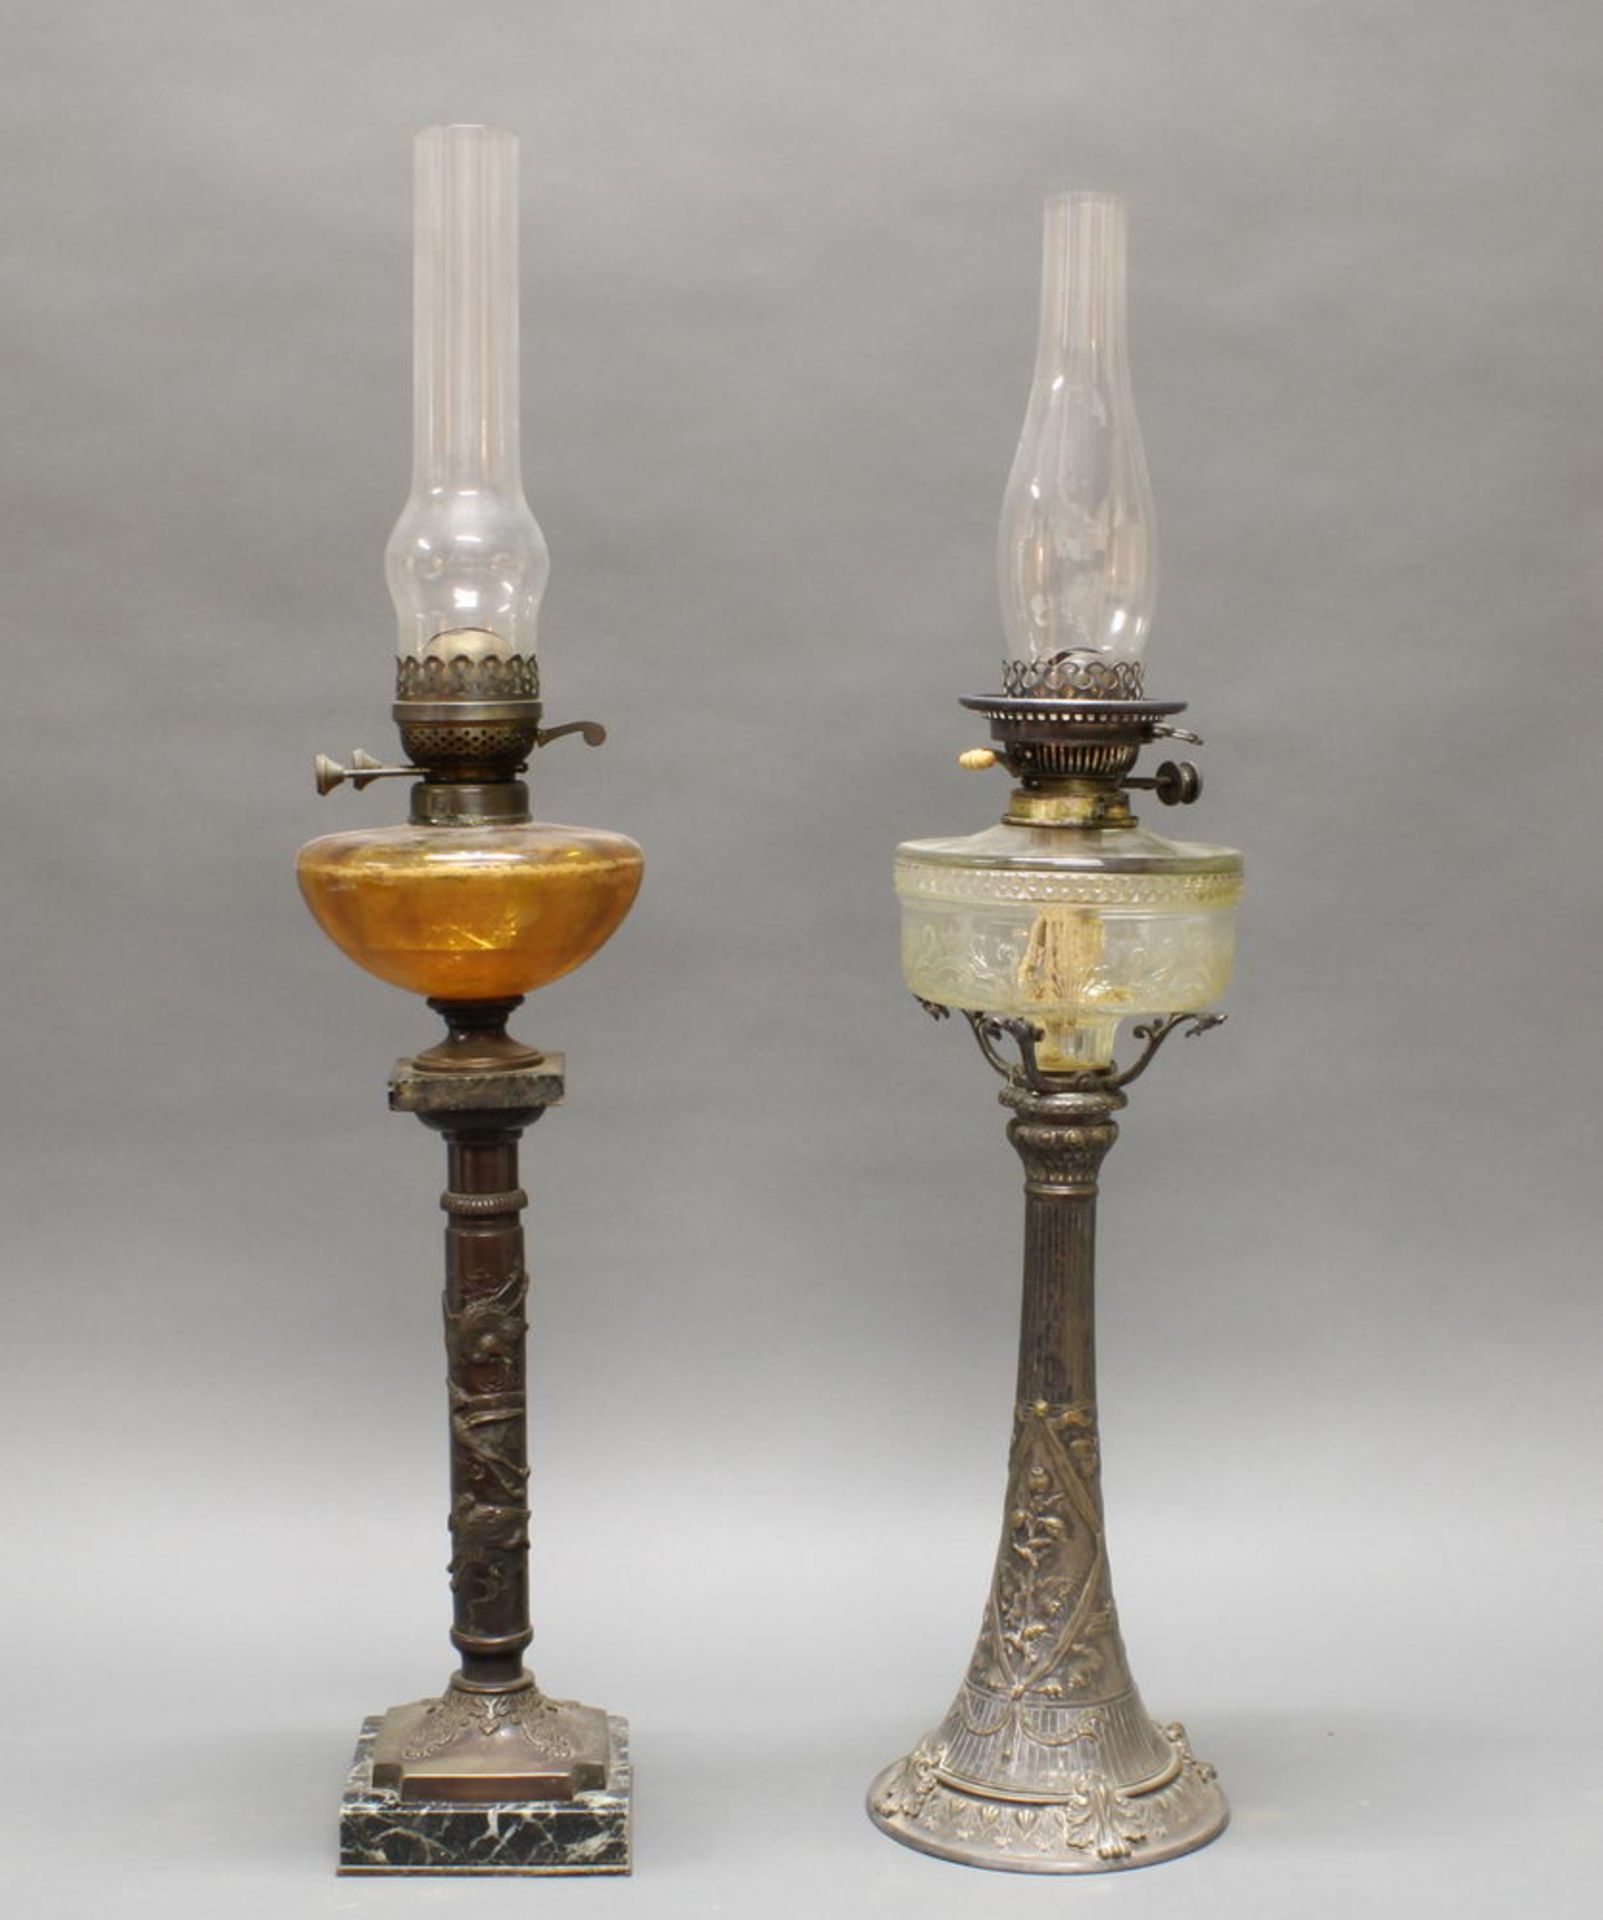 2 Petroleumlampen, 19./20. Jh., verschieden, 81-83 cm hoch, Altersspuren, Glasschirm fehlt, Funktio